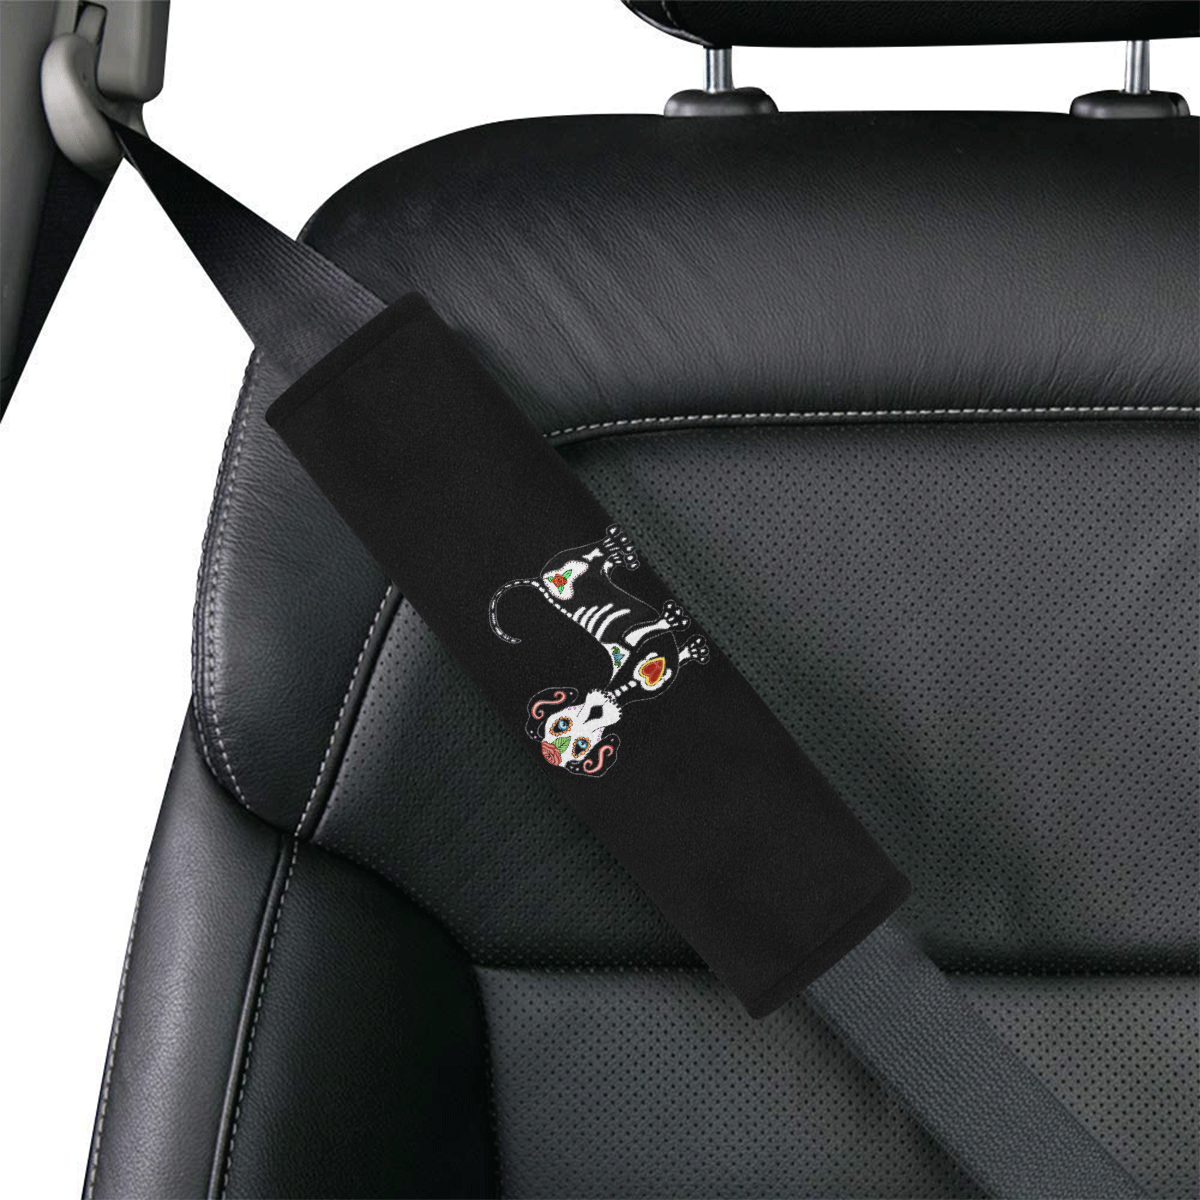 Dachshund Sugar Skull Black Car Seat Belt Cover 7''x10''